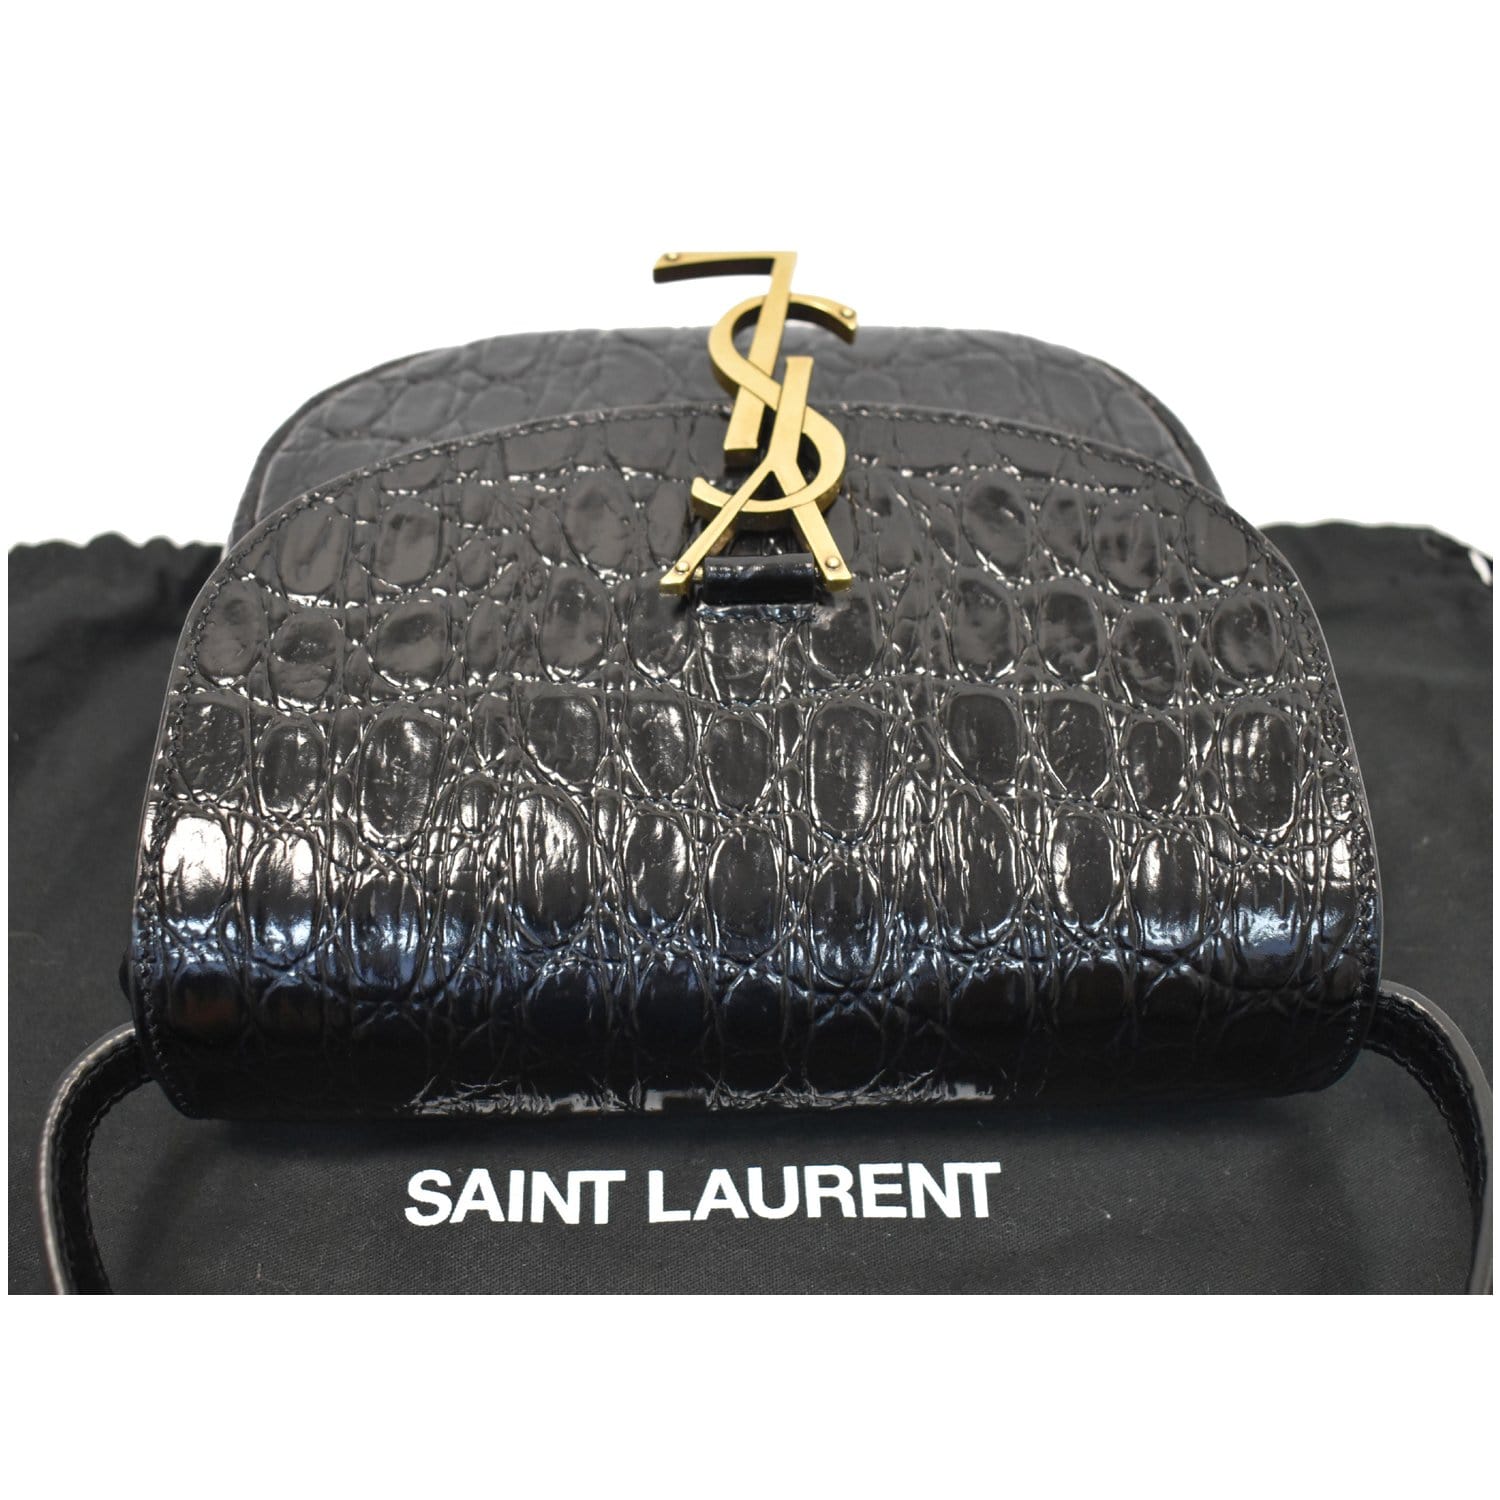 Saint Laurent Kaia Mini Leather Shoulder Bag in Black